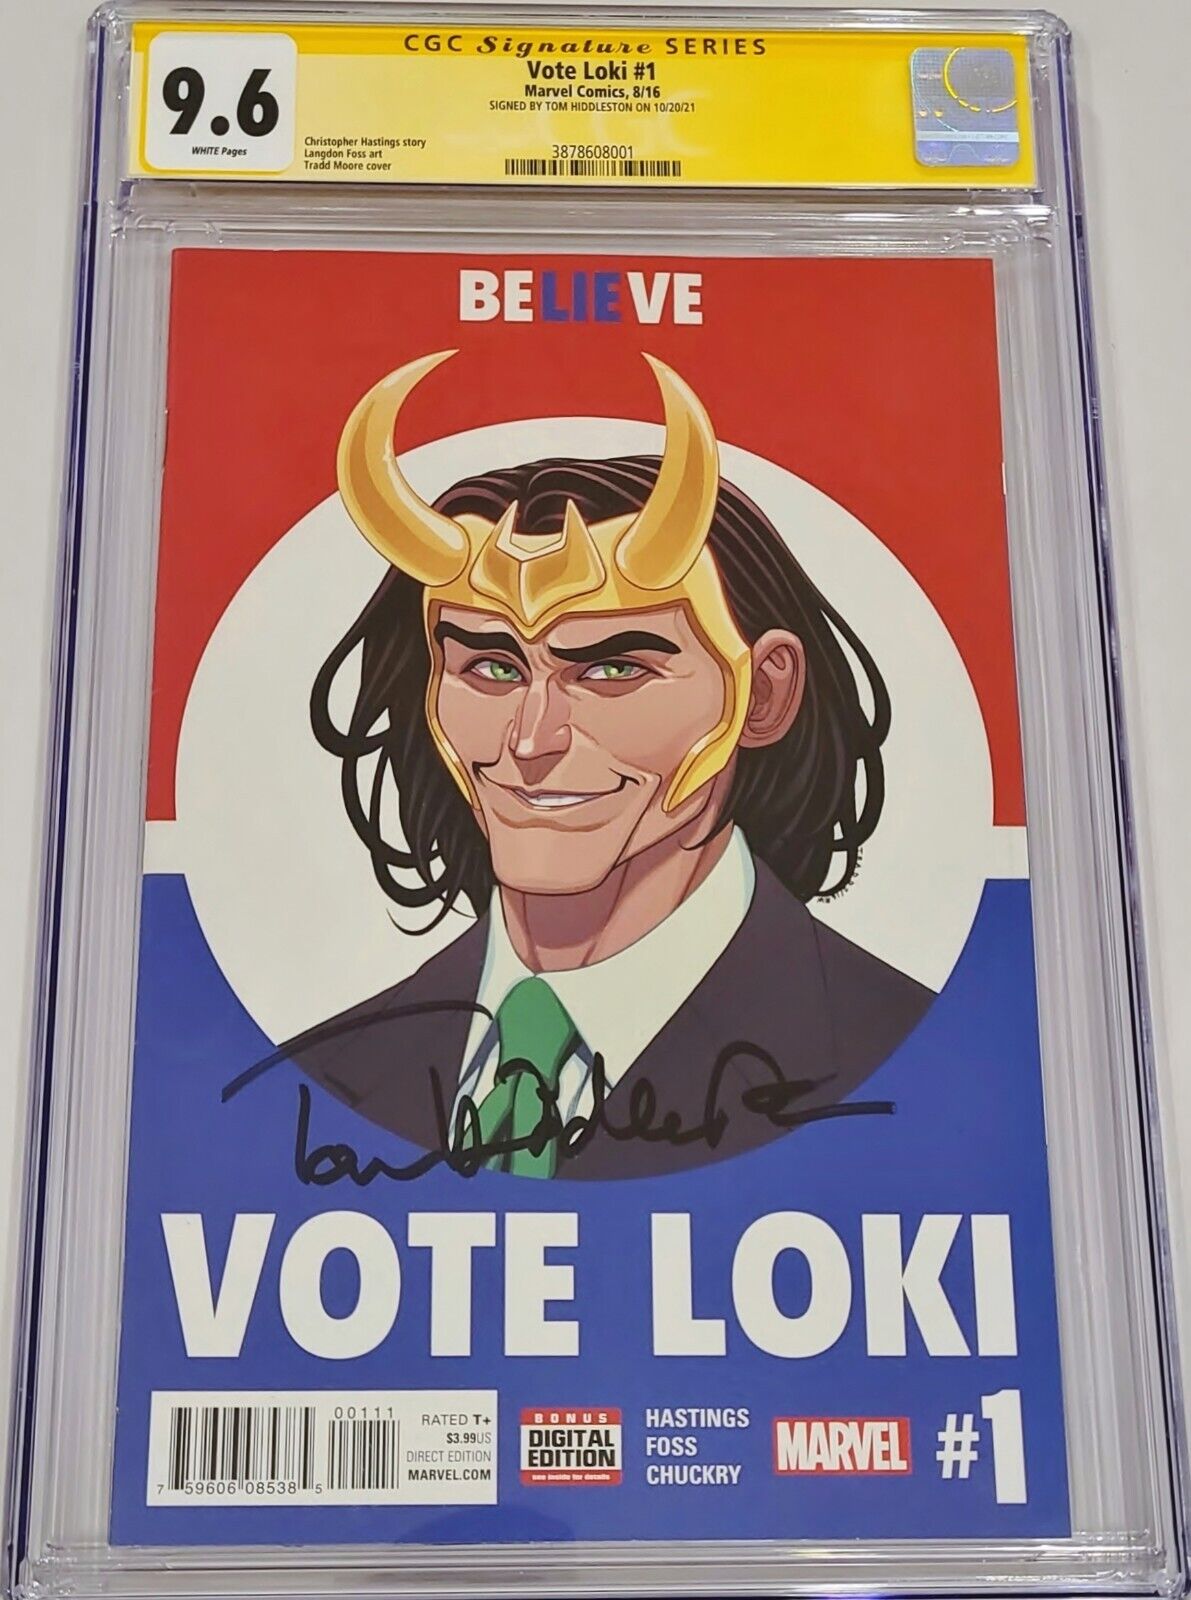 VOTE LOKI #1 (2016) CGC 9.6 SS Signed Tom Hiddleston(Loki Actor) AVENGERS